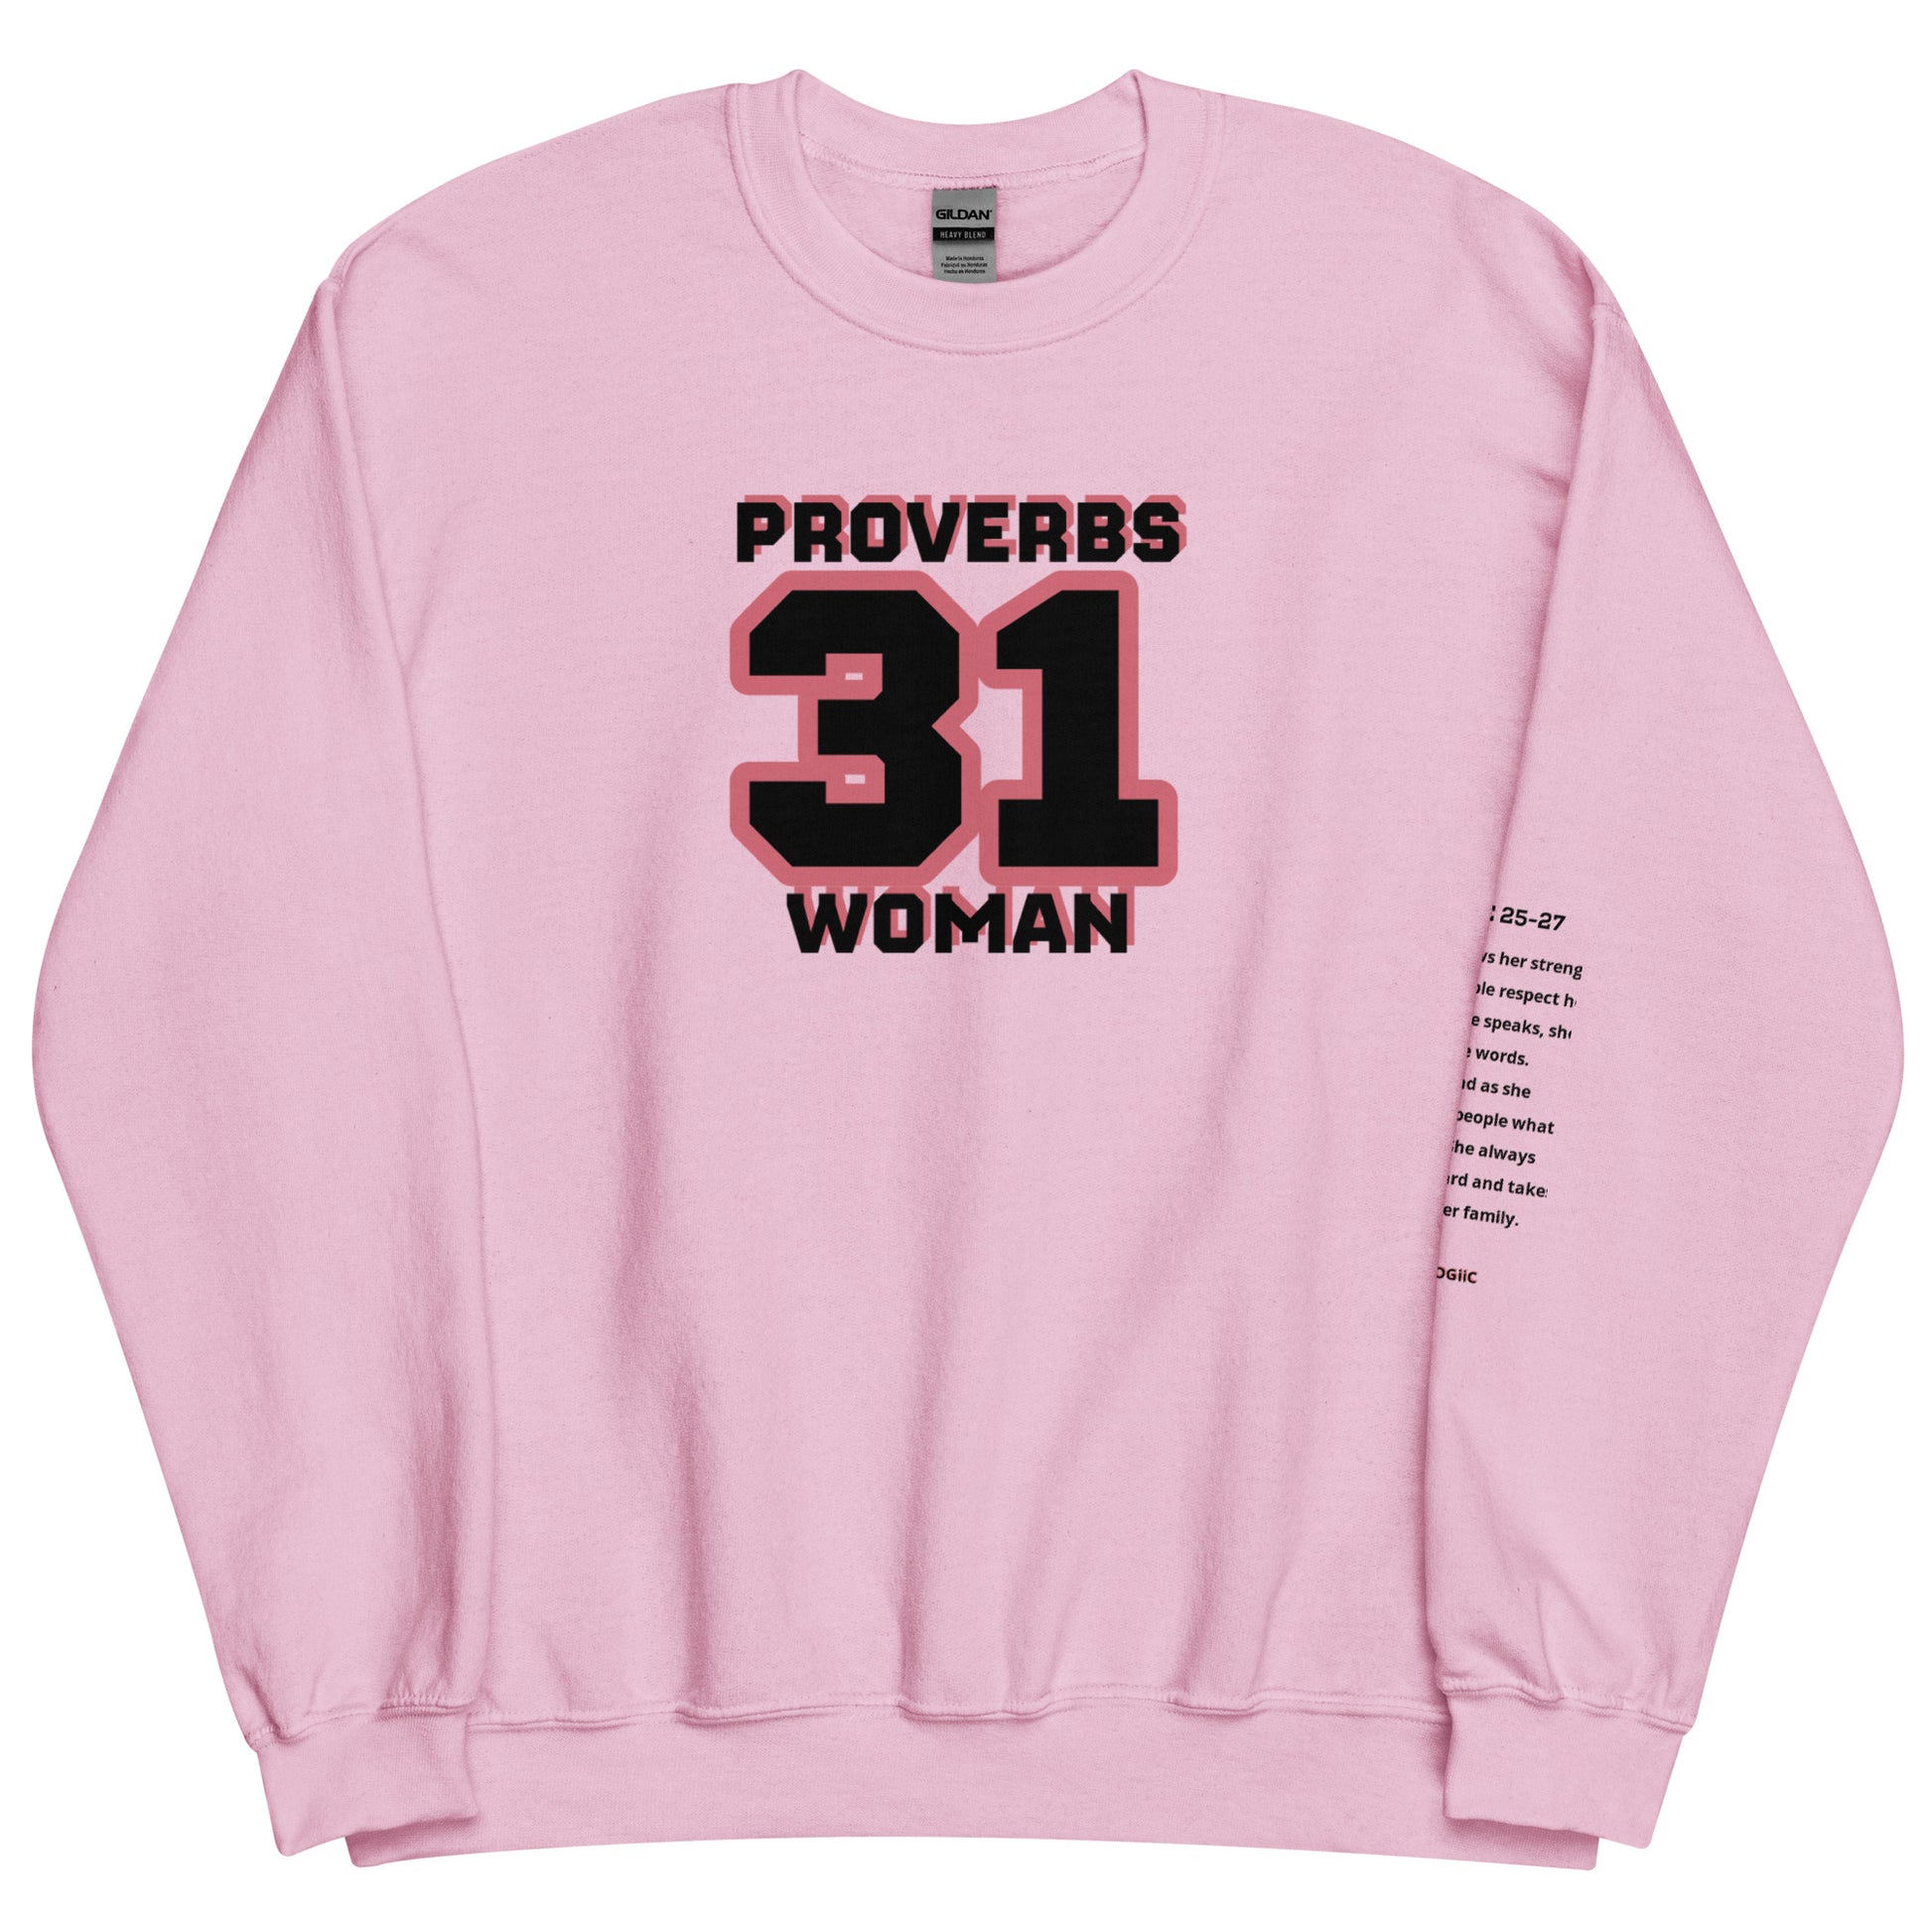 Proverbs 31 Woman Unisex Sweatshirt - Shirts & Tops